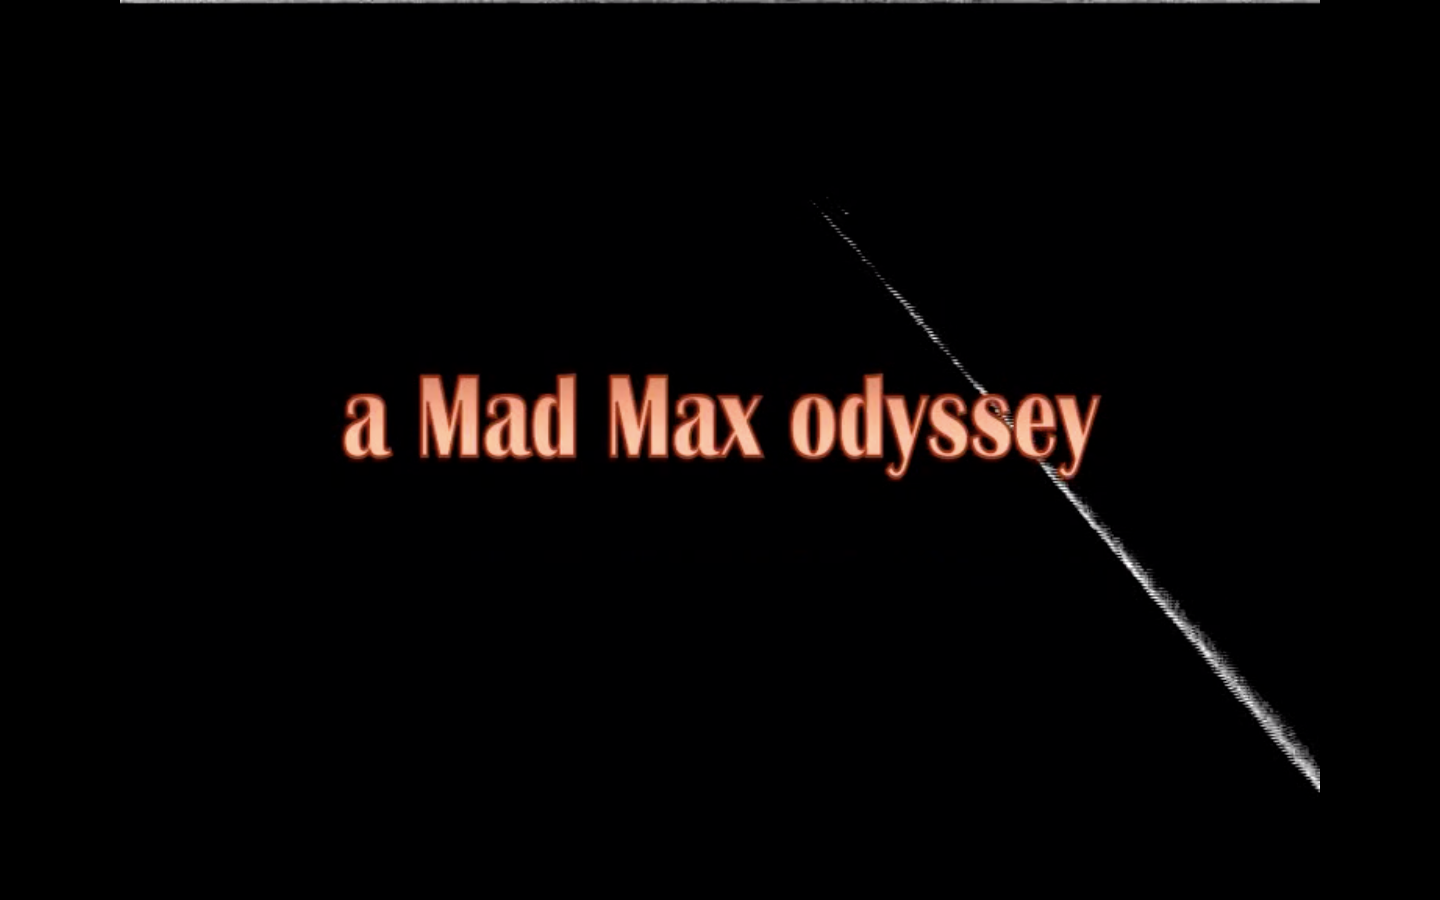 Mad Max Odyssey